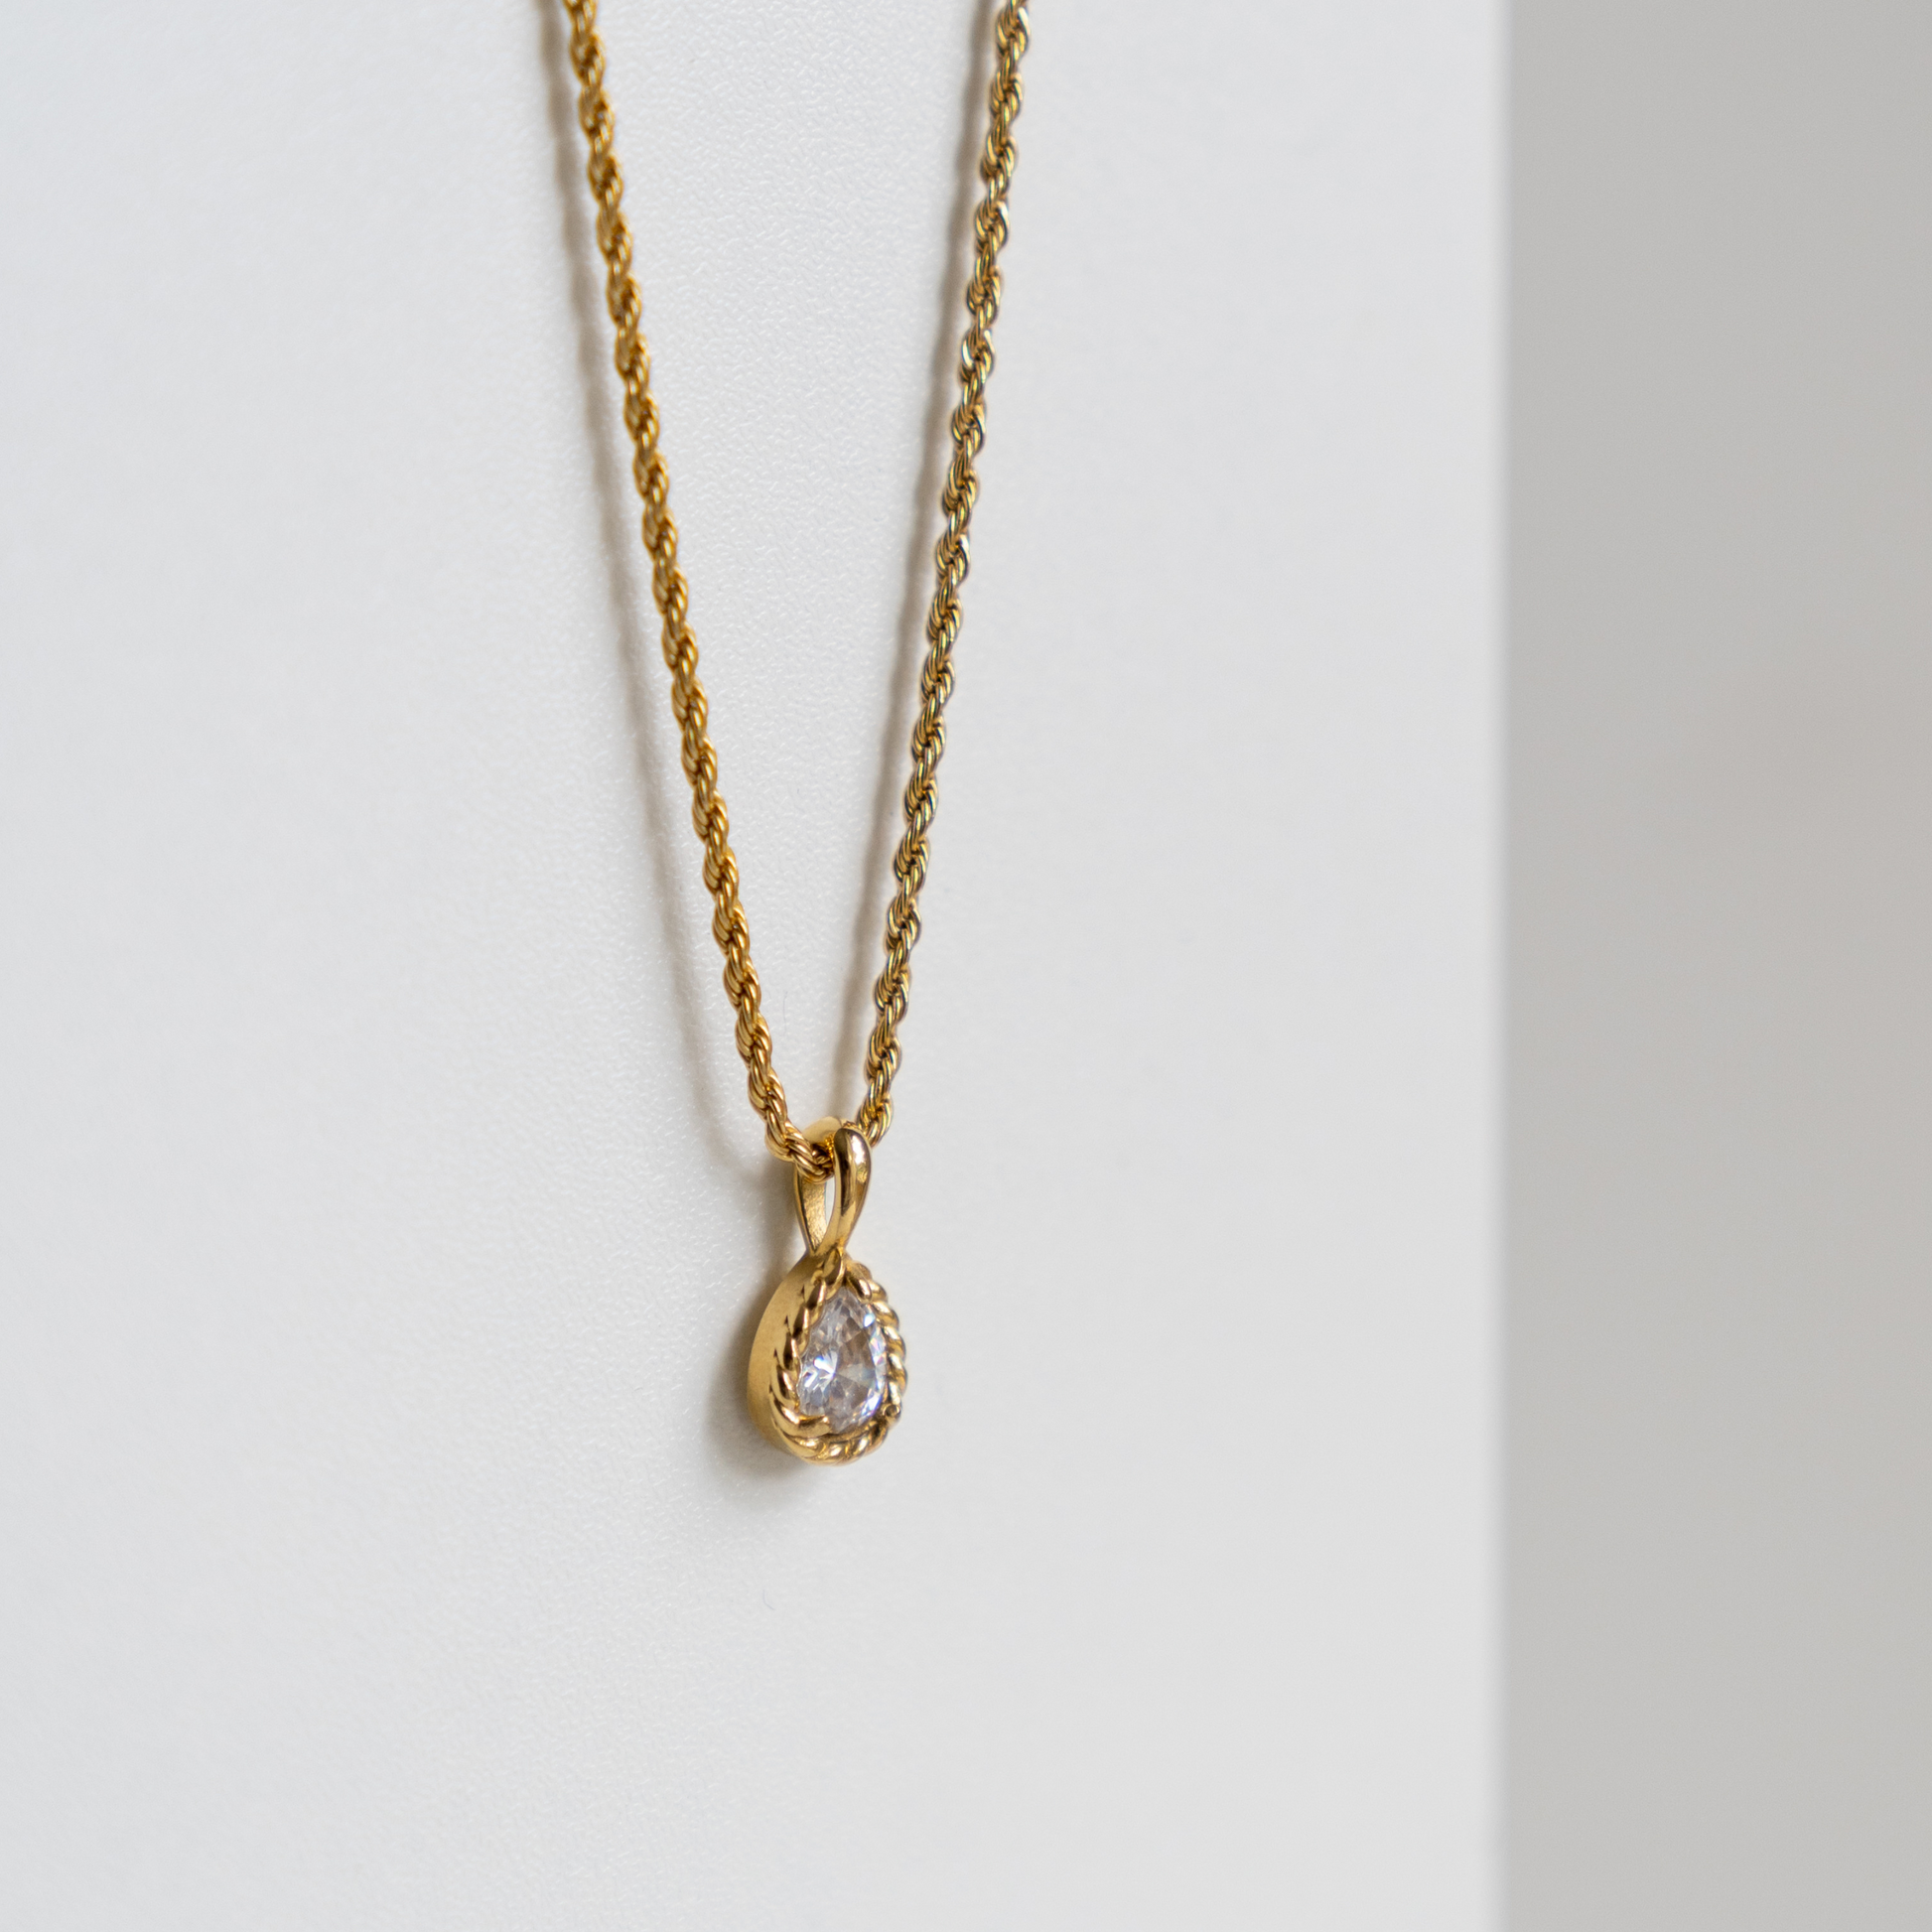 Dewdrop Necklace - La Musa Jewellery